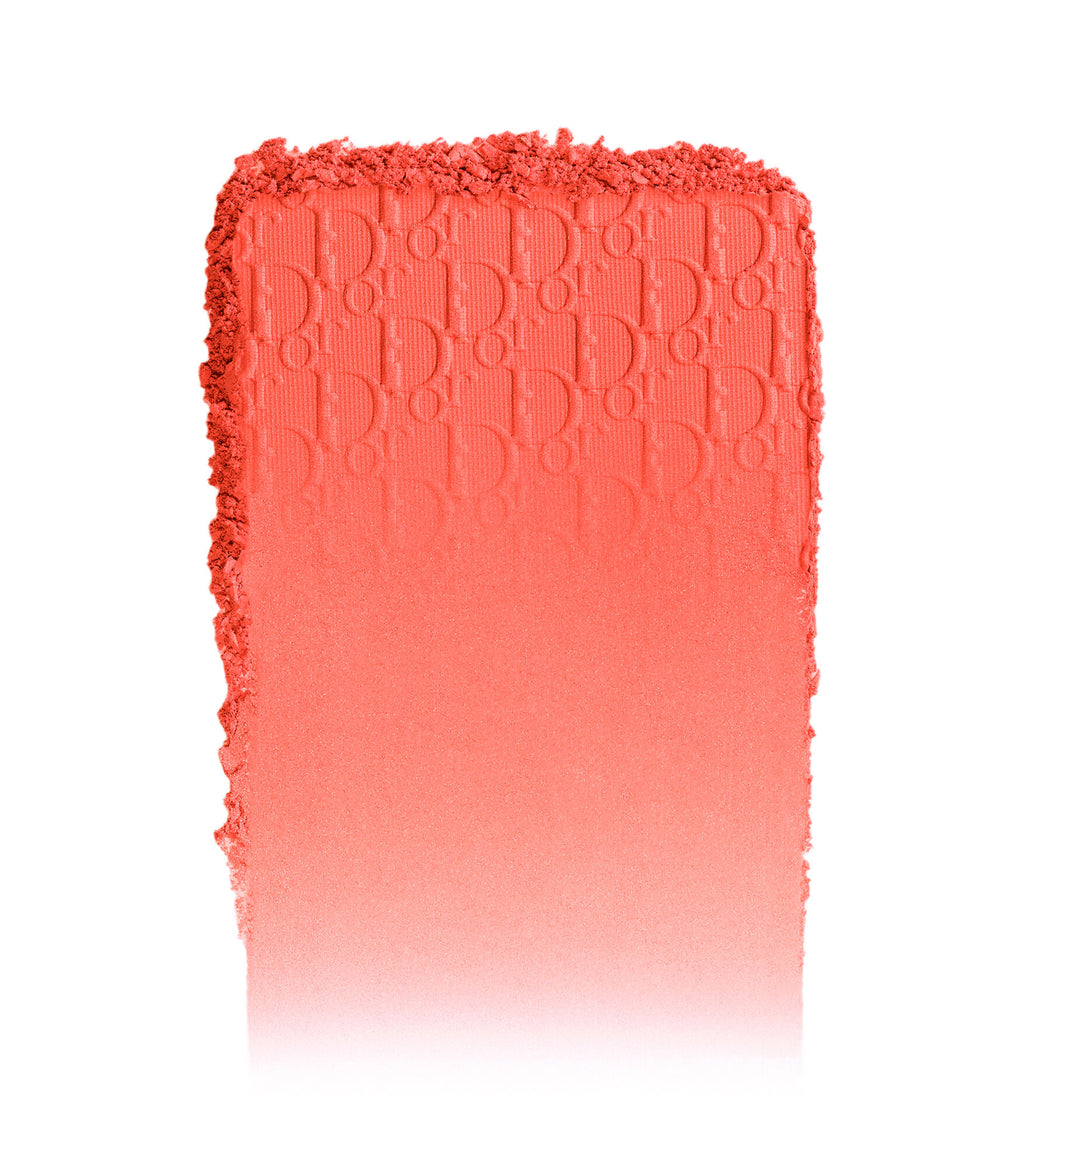 Phấn Má Hồng Dior Rosy Glow #061 Poppy Coral